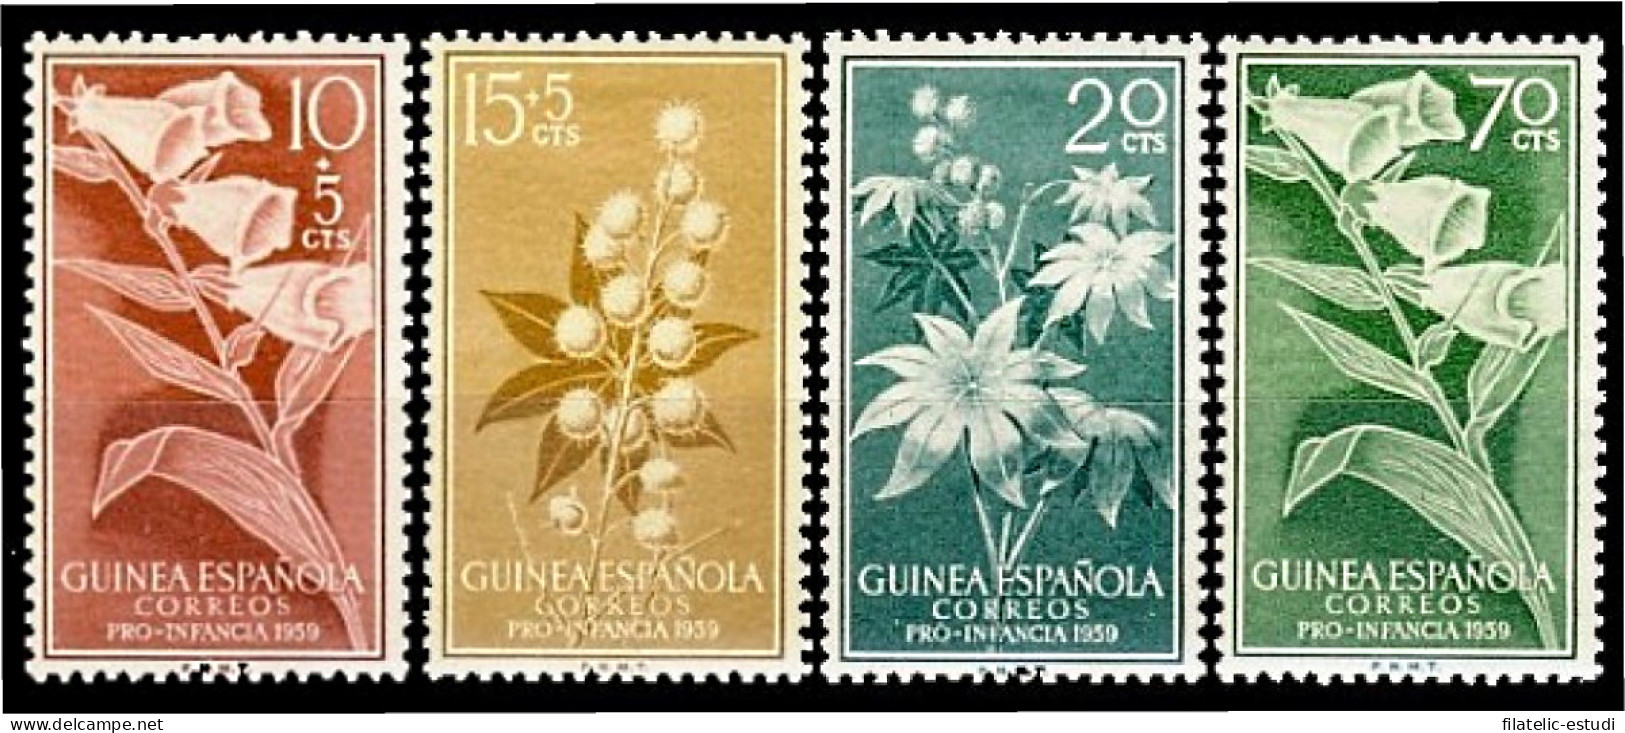 Guinea Española 391/94 1959 Pro Infancia Flora MNH - Guinea Spagnola